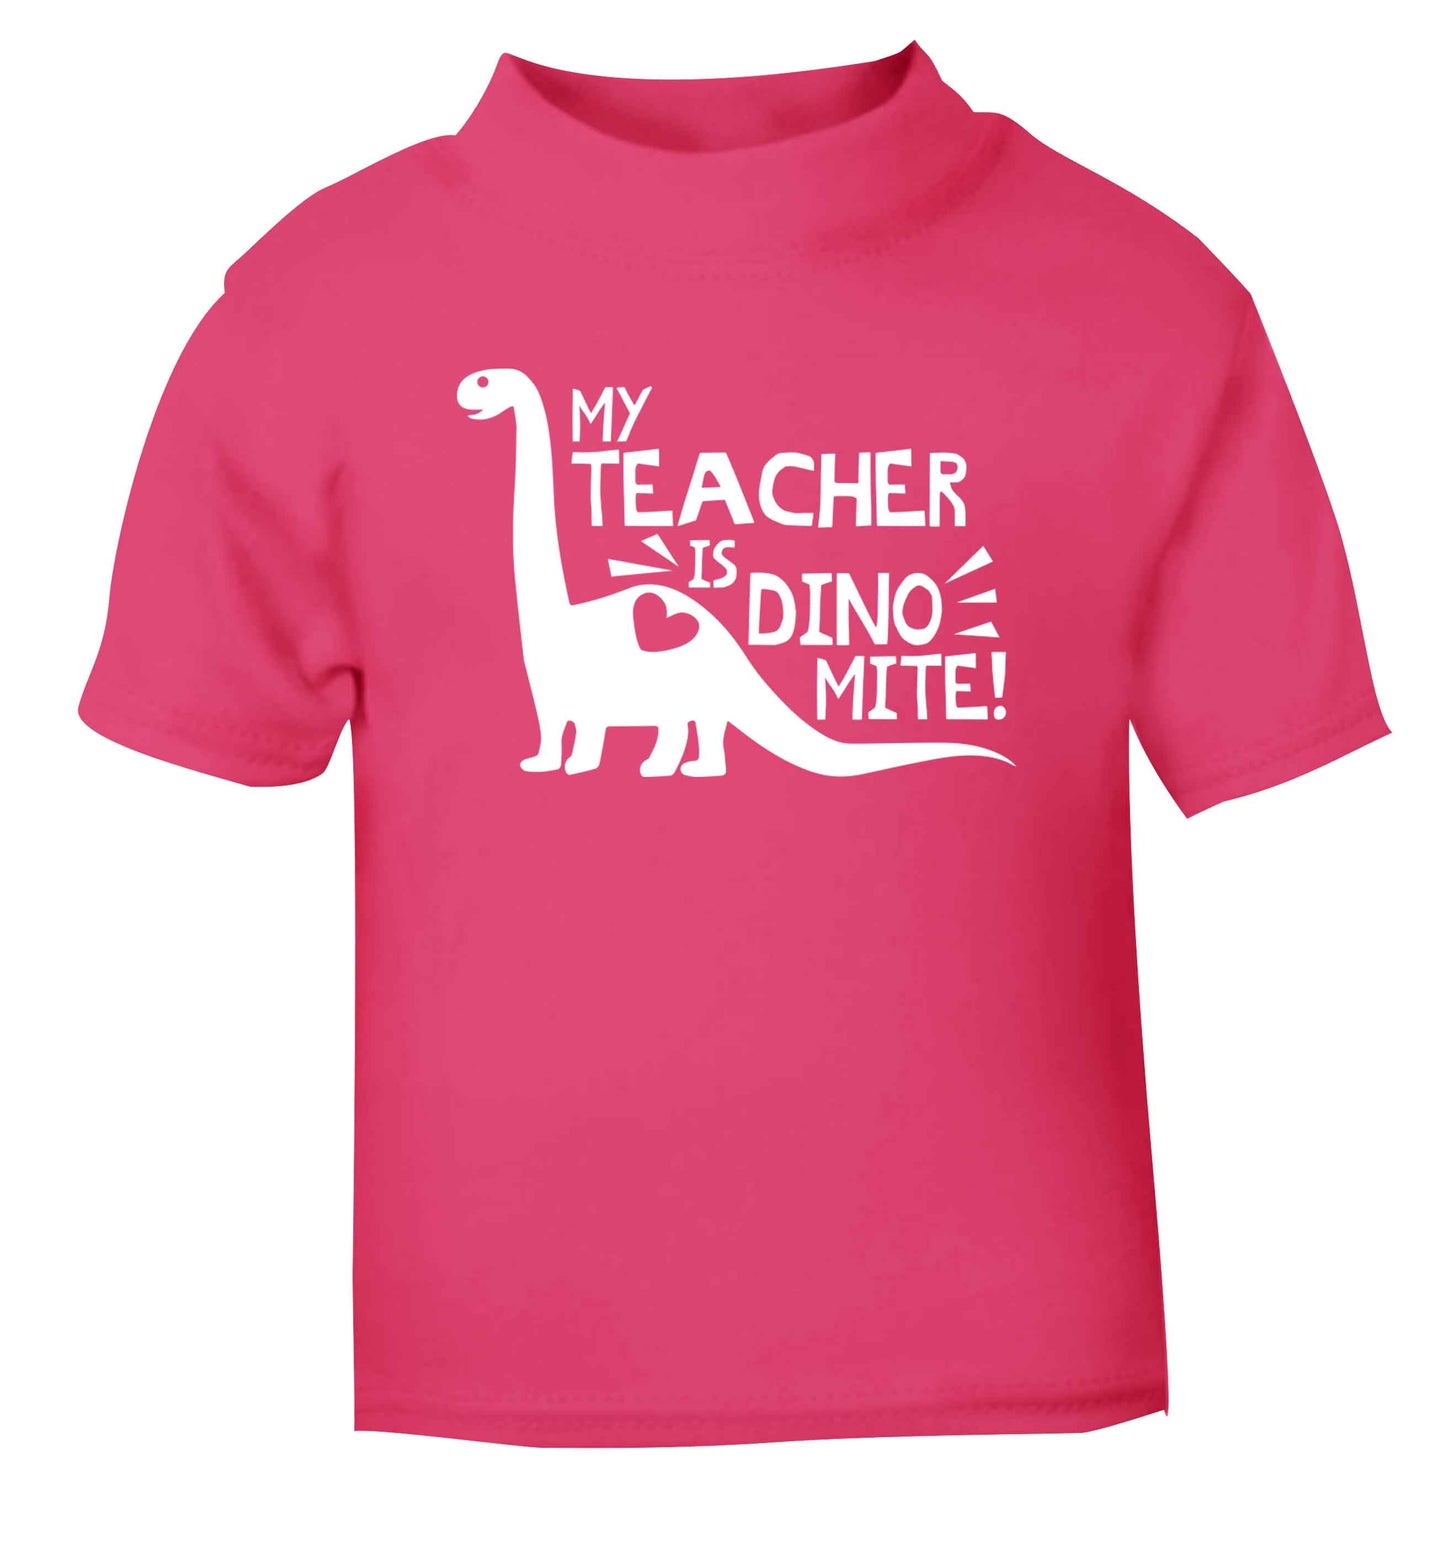 My teacher is dinomite! pink Baby Toddler Tshirt 2 Years